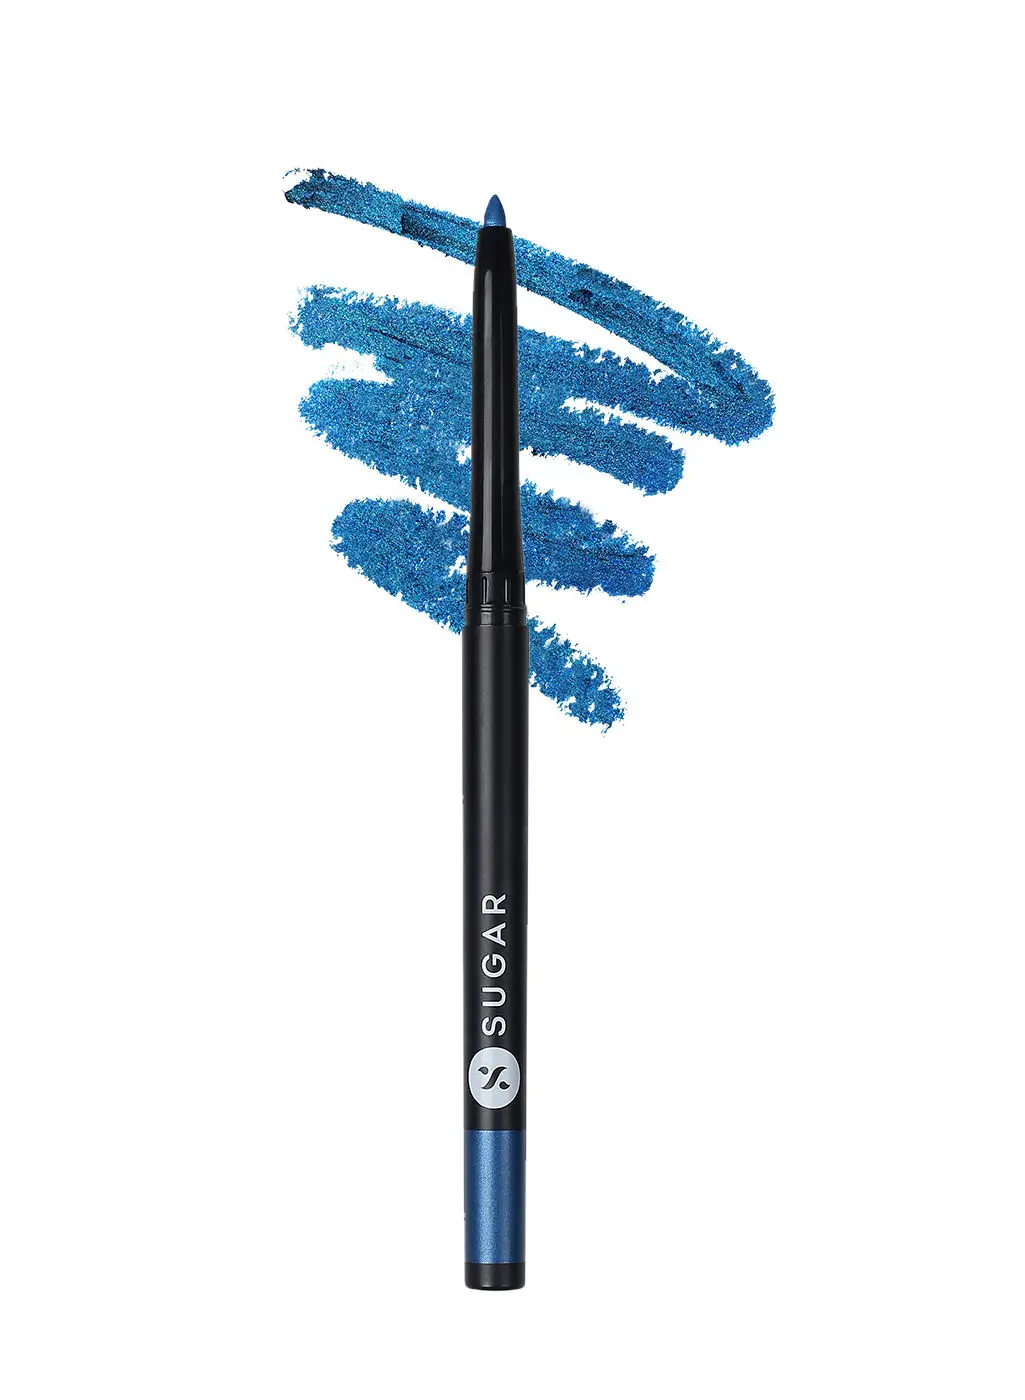 SUGAR Cosmetics - Kohl Of Honour - Intense Kajal - 06 Blue Moon (Blue Kajal) - Ultra Creamy Texture, Smudge Proof, Water Proof Kajal, Long Lasting Eye Pencil, Lasts Up to 12 hours